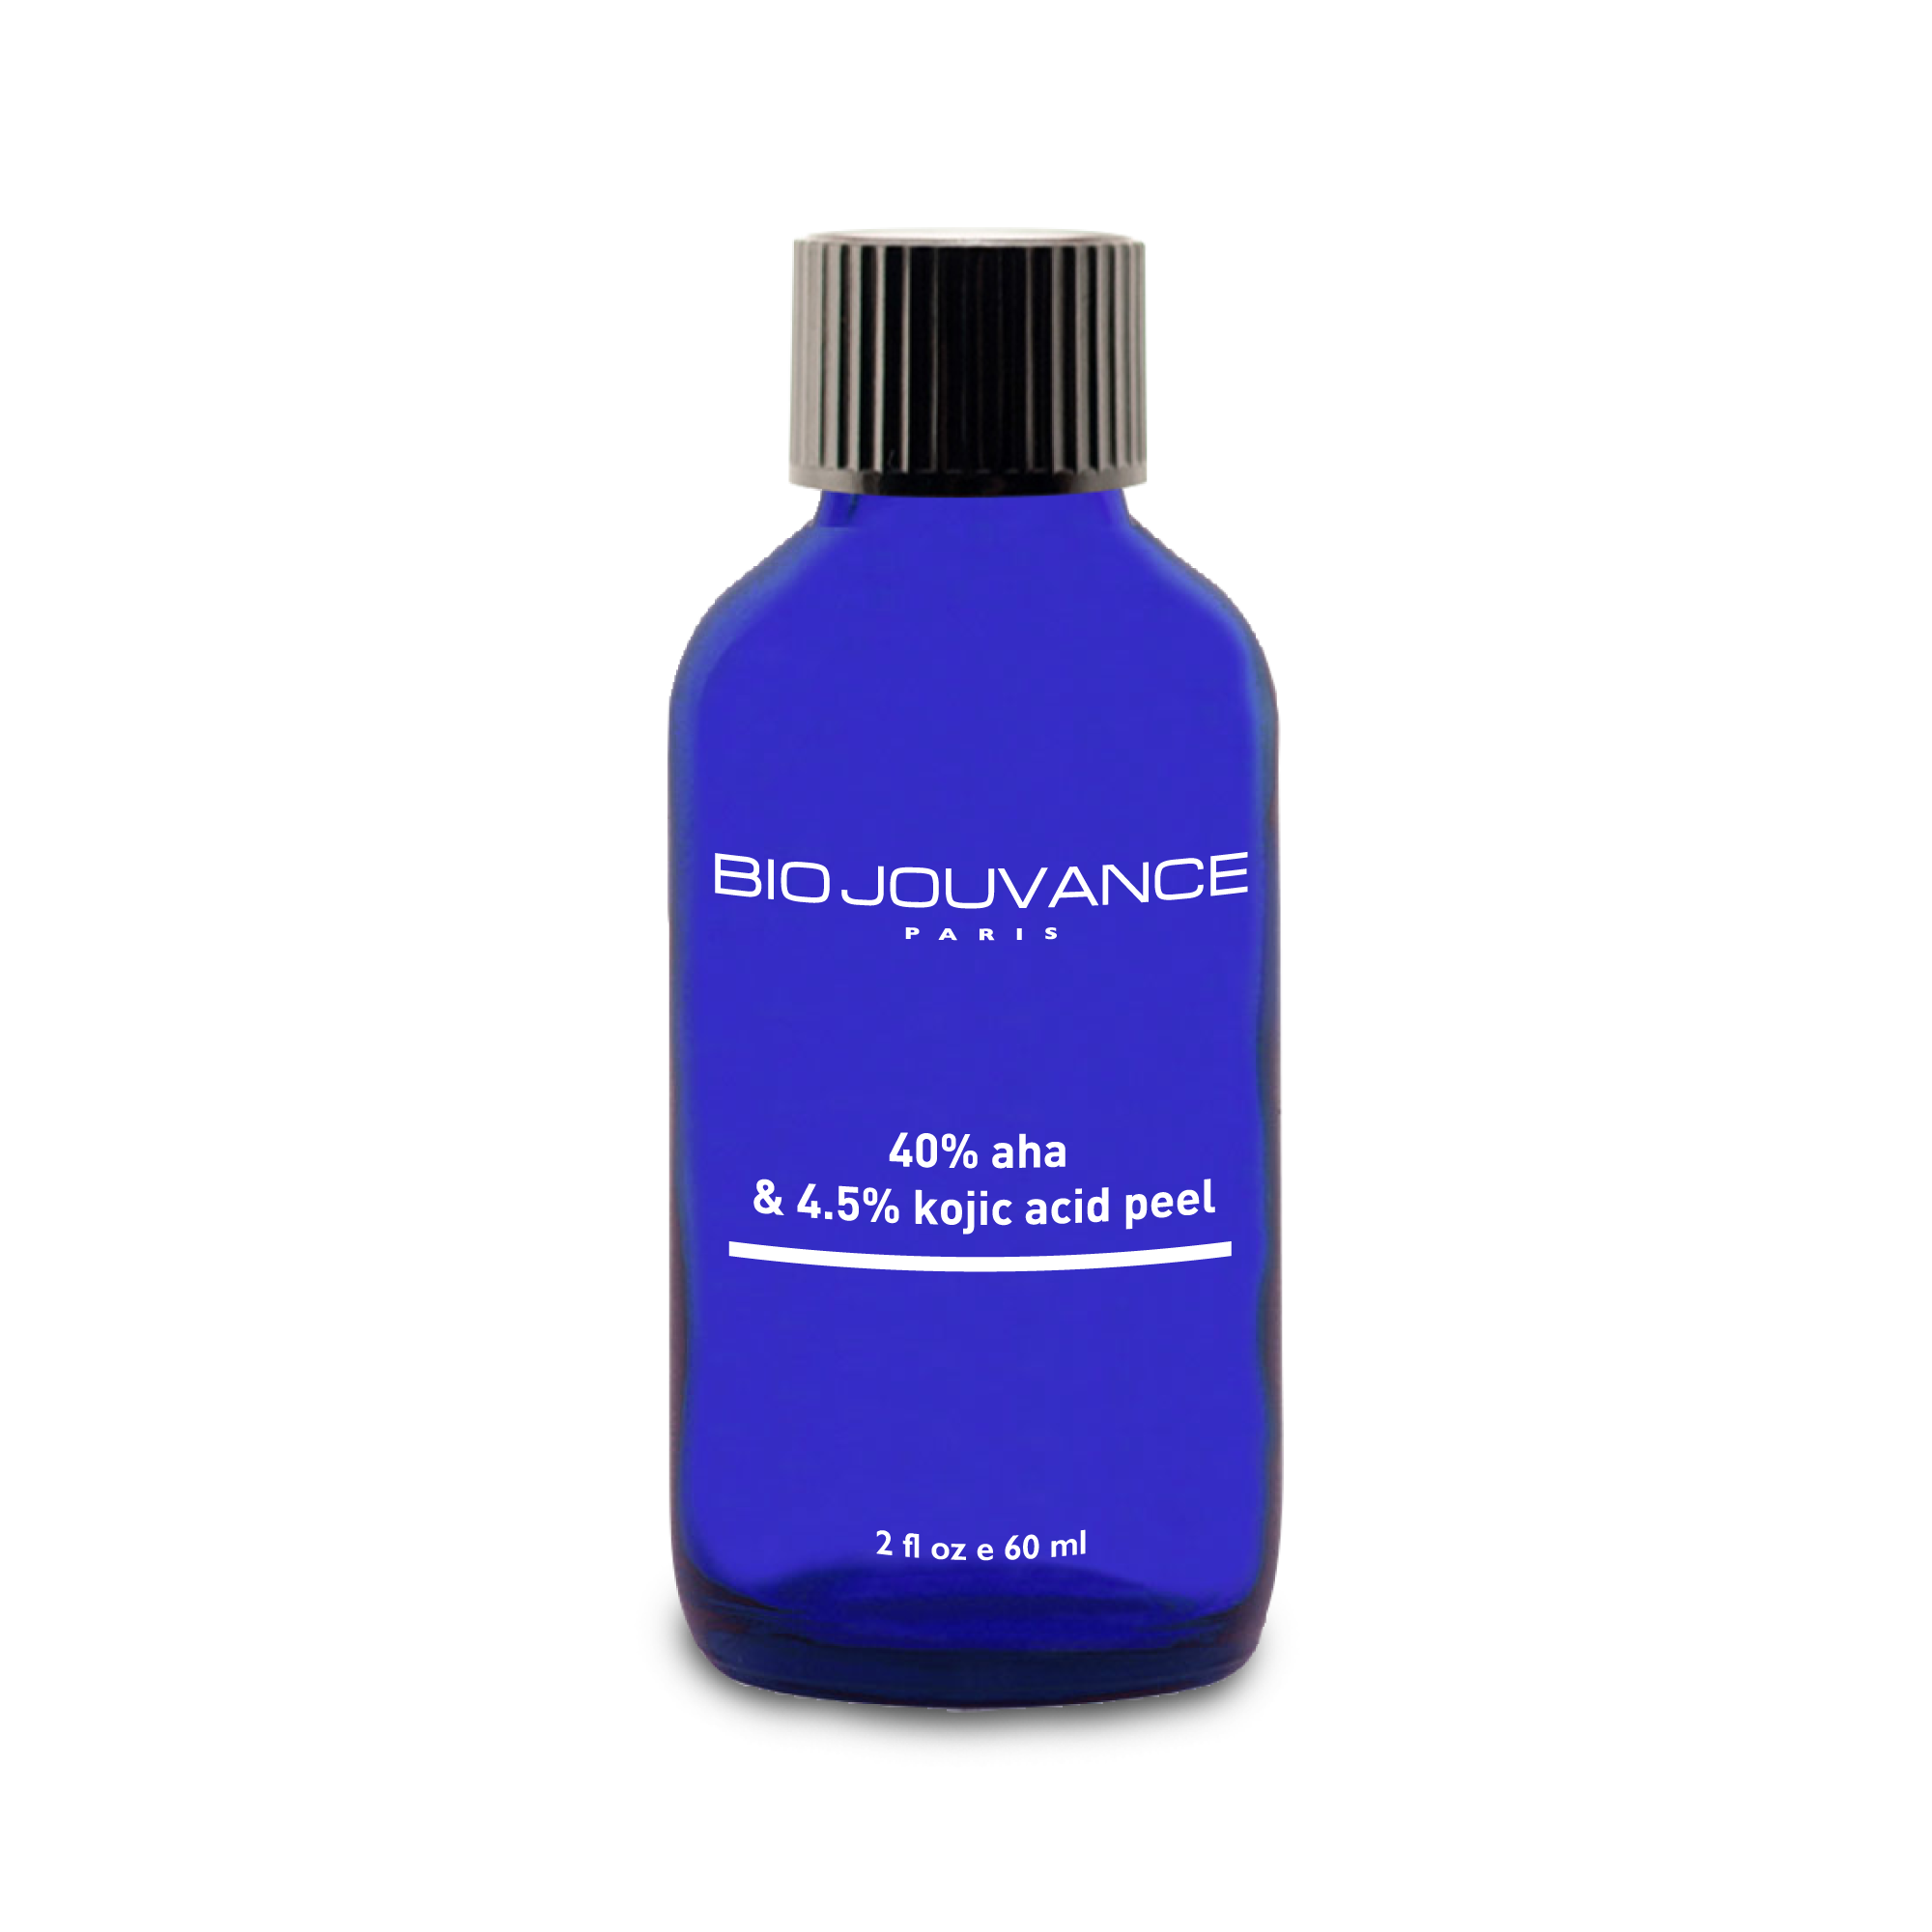 Biojouvance Paris 40% AHA and 4.5% Kojic Acid Peel For All Skin Types 